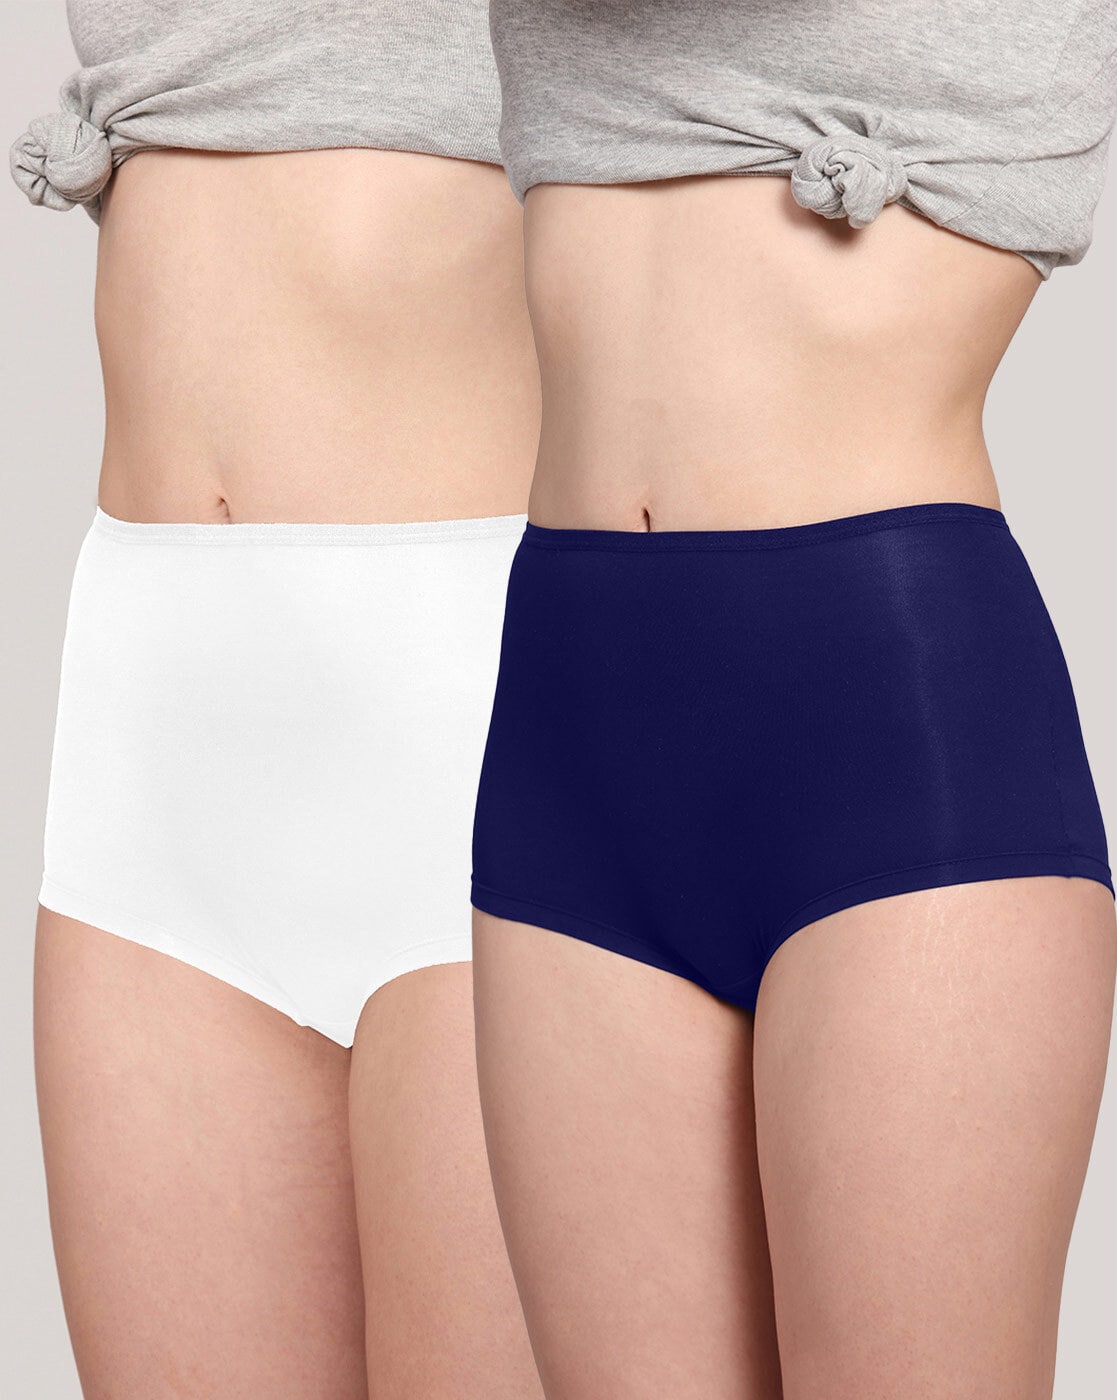 How AshleyandAlvis Is Taking Over the Women's & Men's Underwear